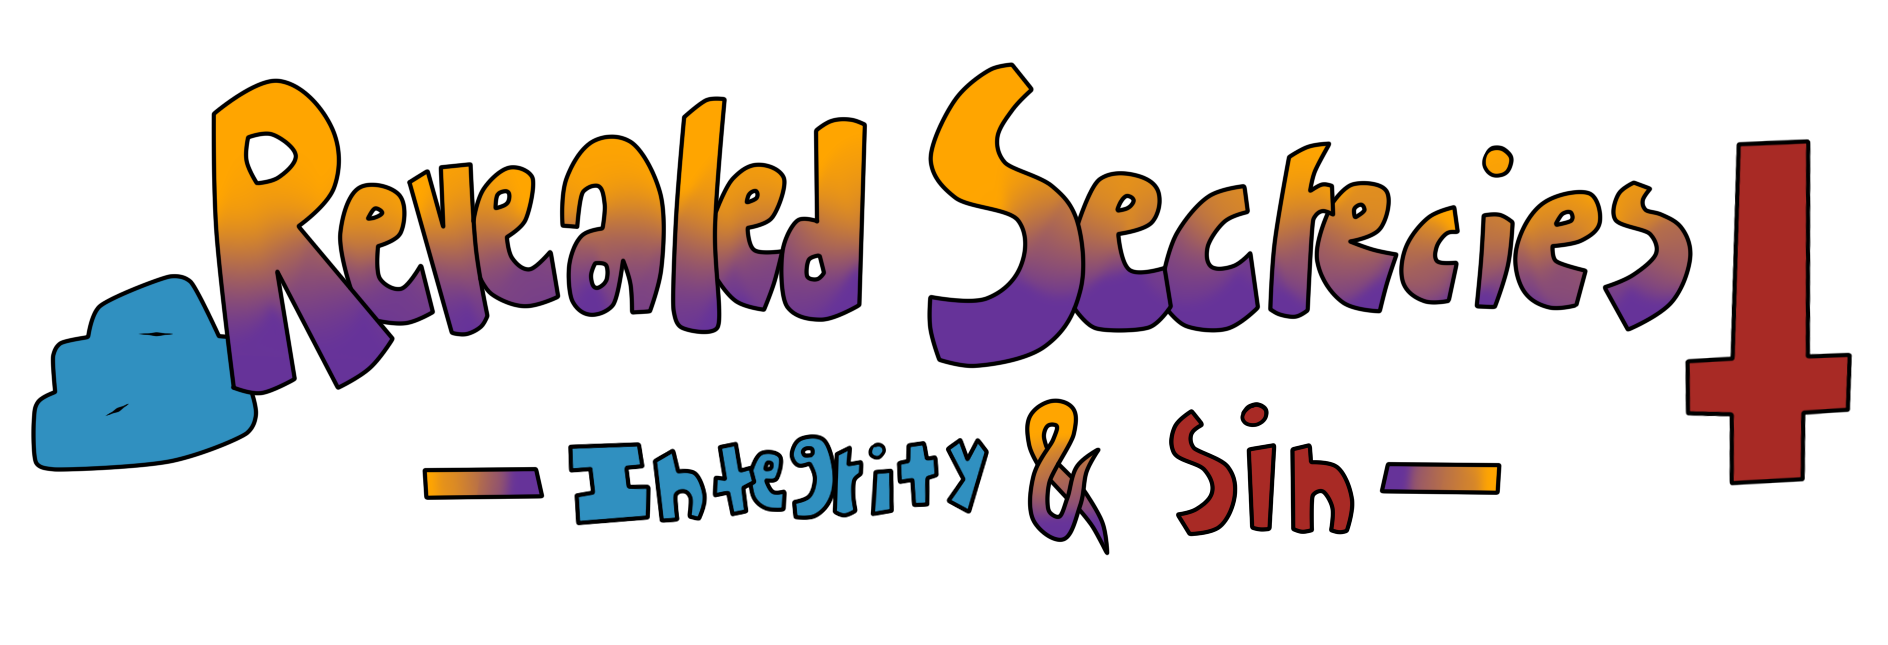 Revealed Secrecies -Integrity & Sin-